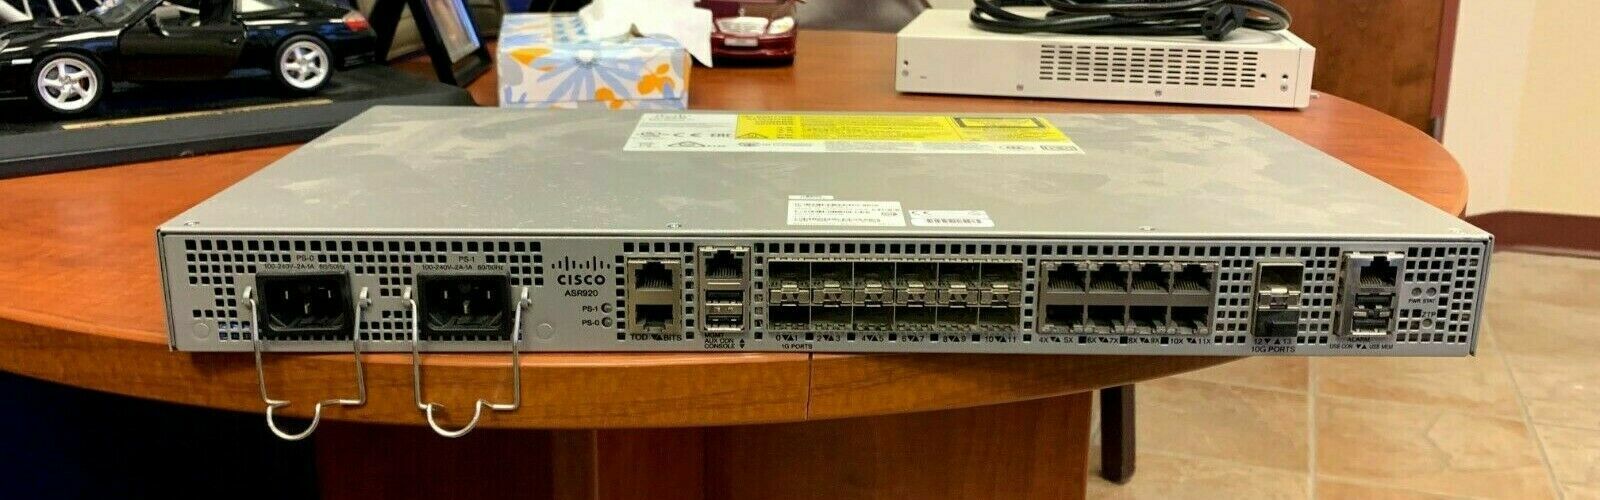 Cisco ASR-920-12CZ-A Aggregation Services Router 